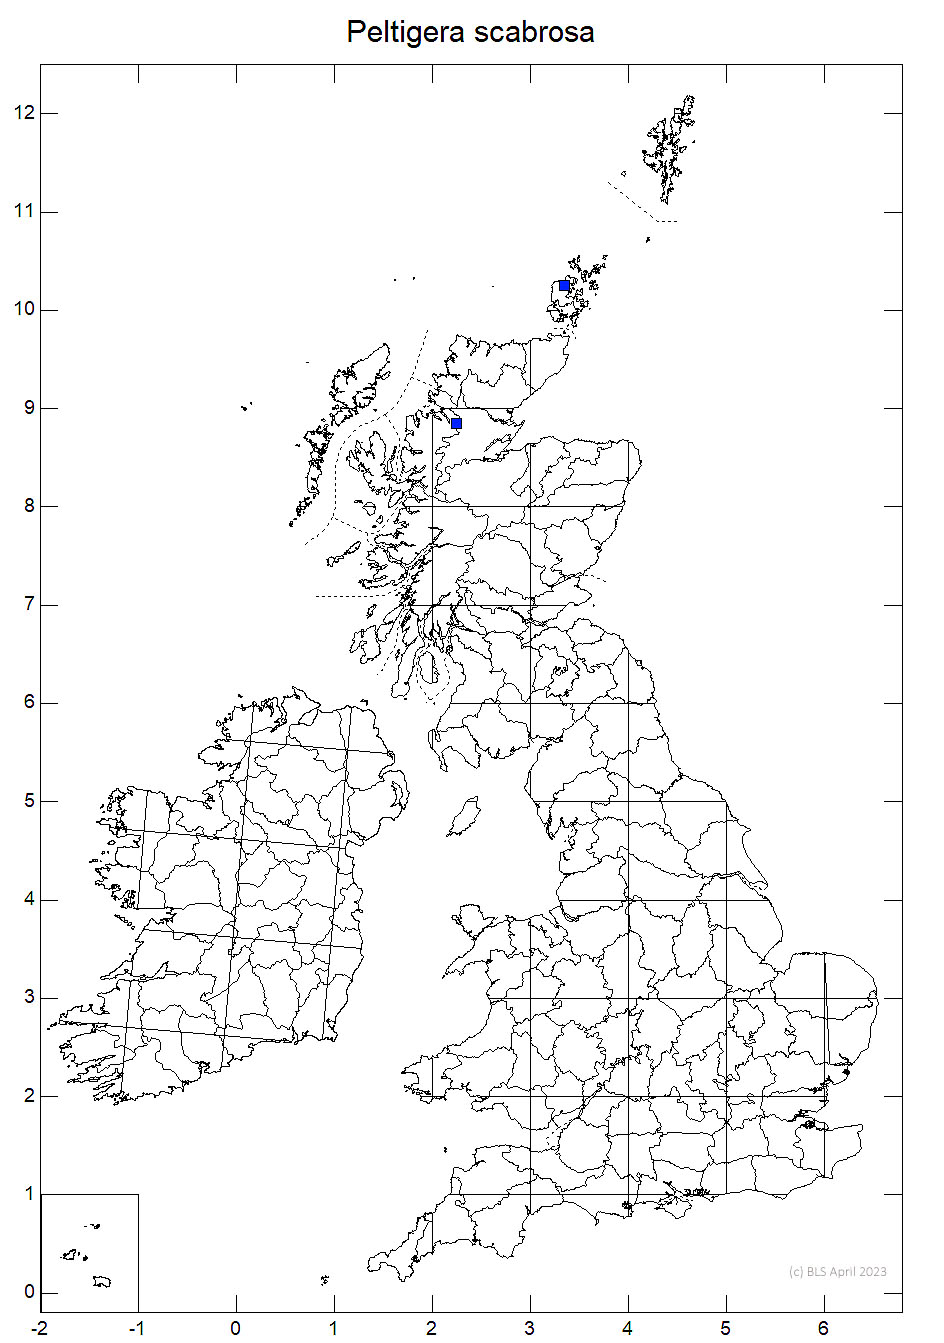 Peltigera scabrosa 10km sq distribution map